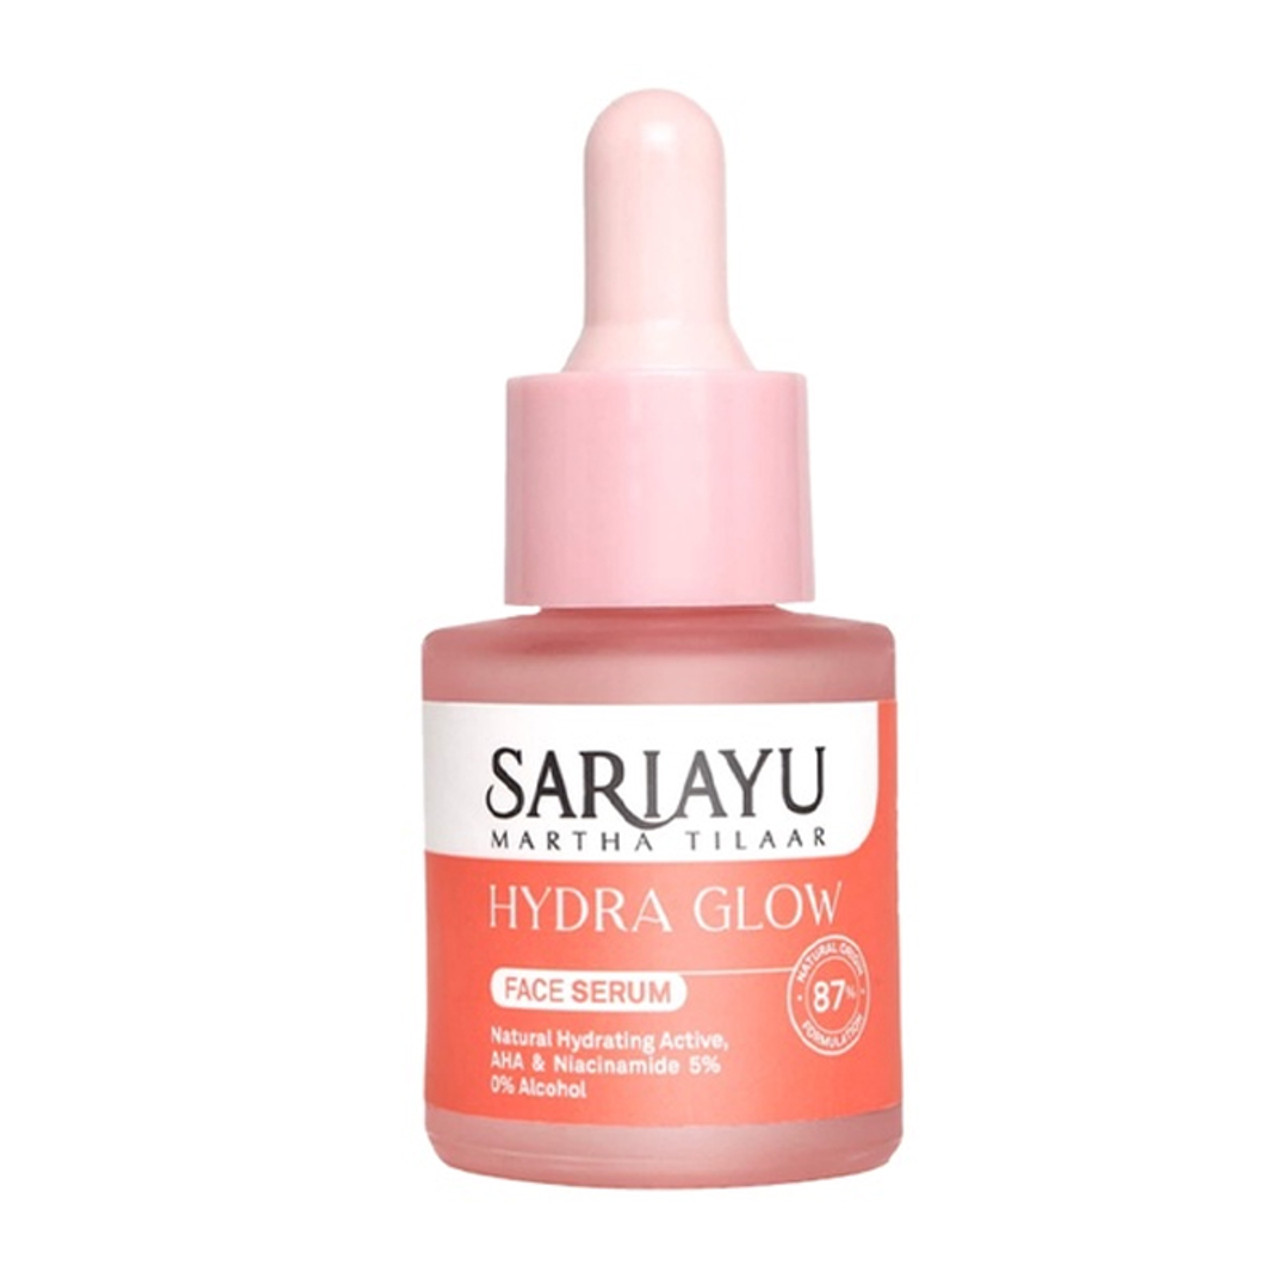 Sariayu Hydra Glow Face Serum, 20ml